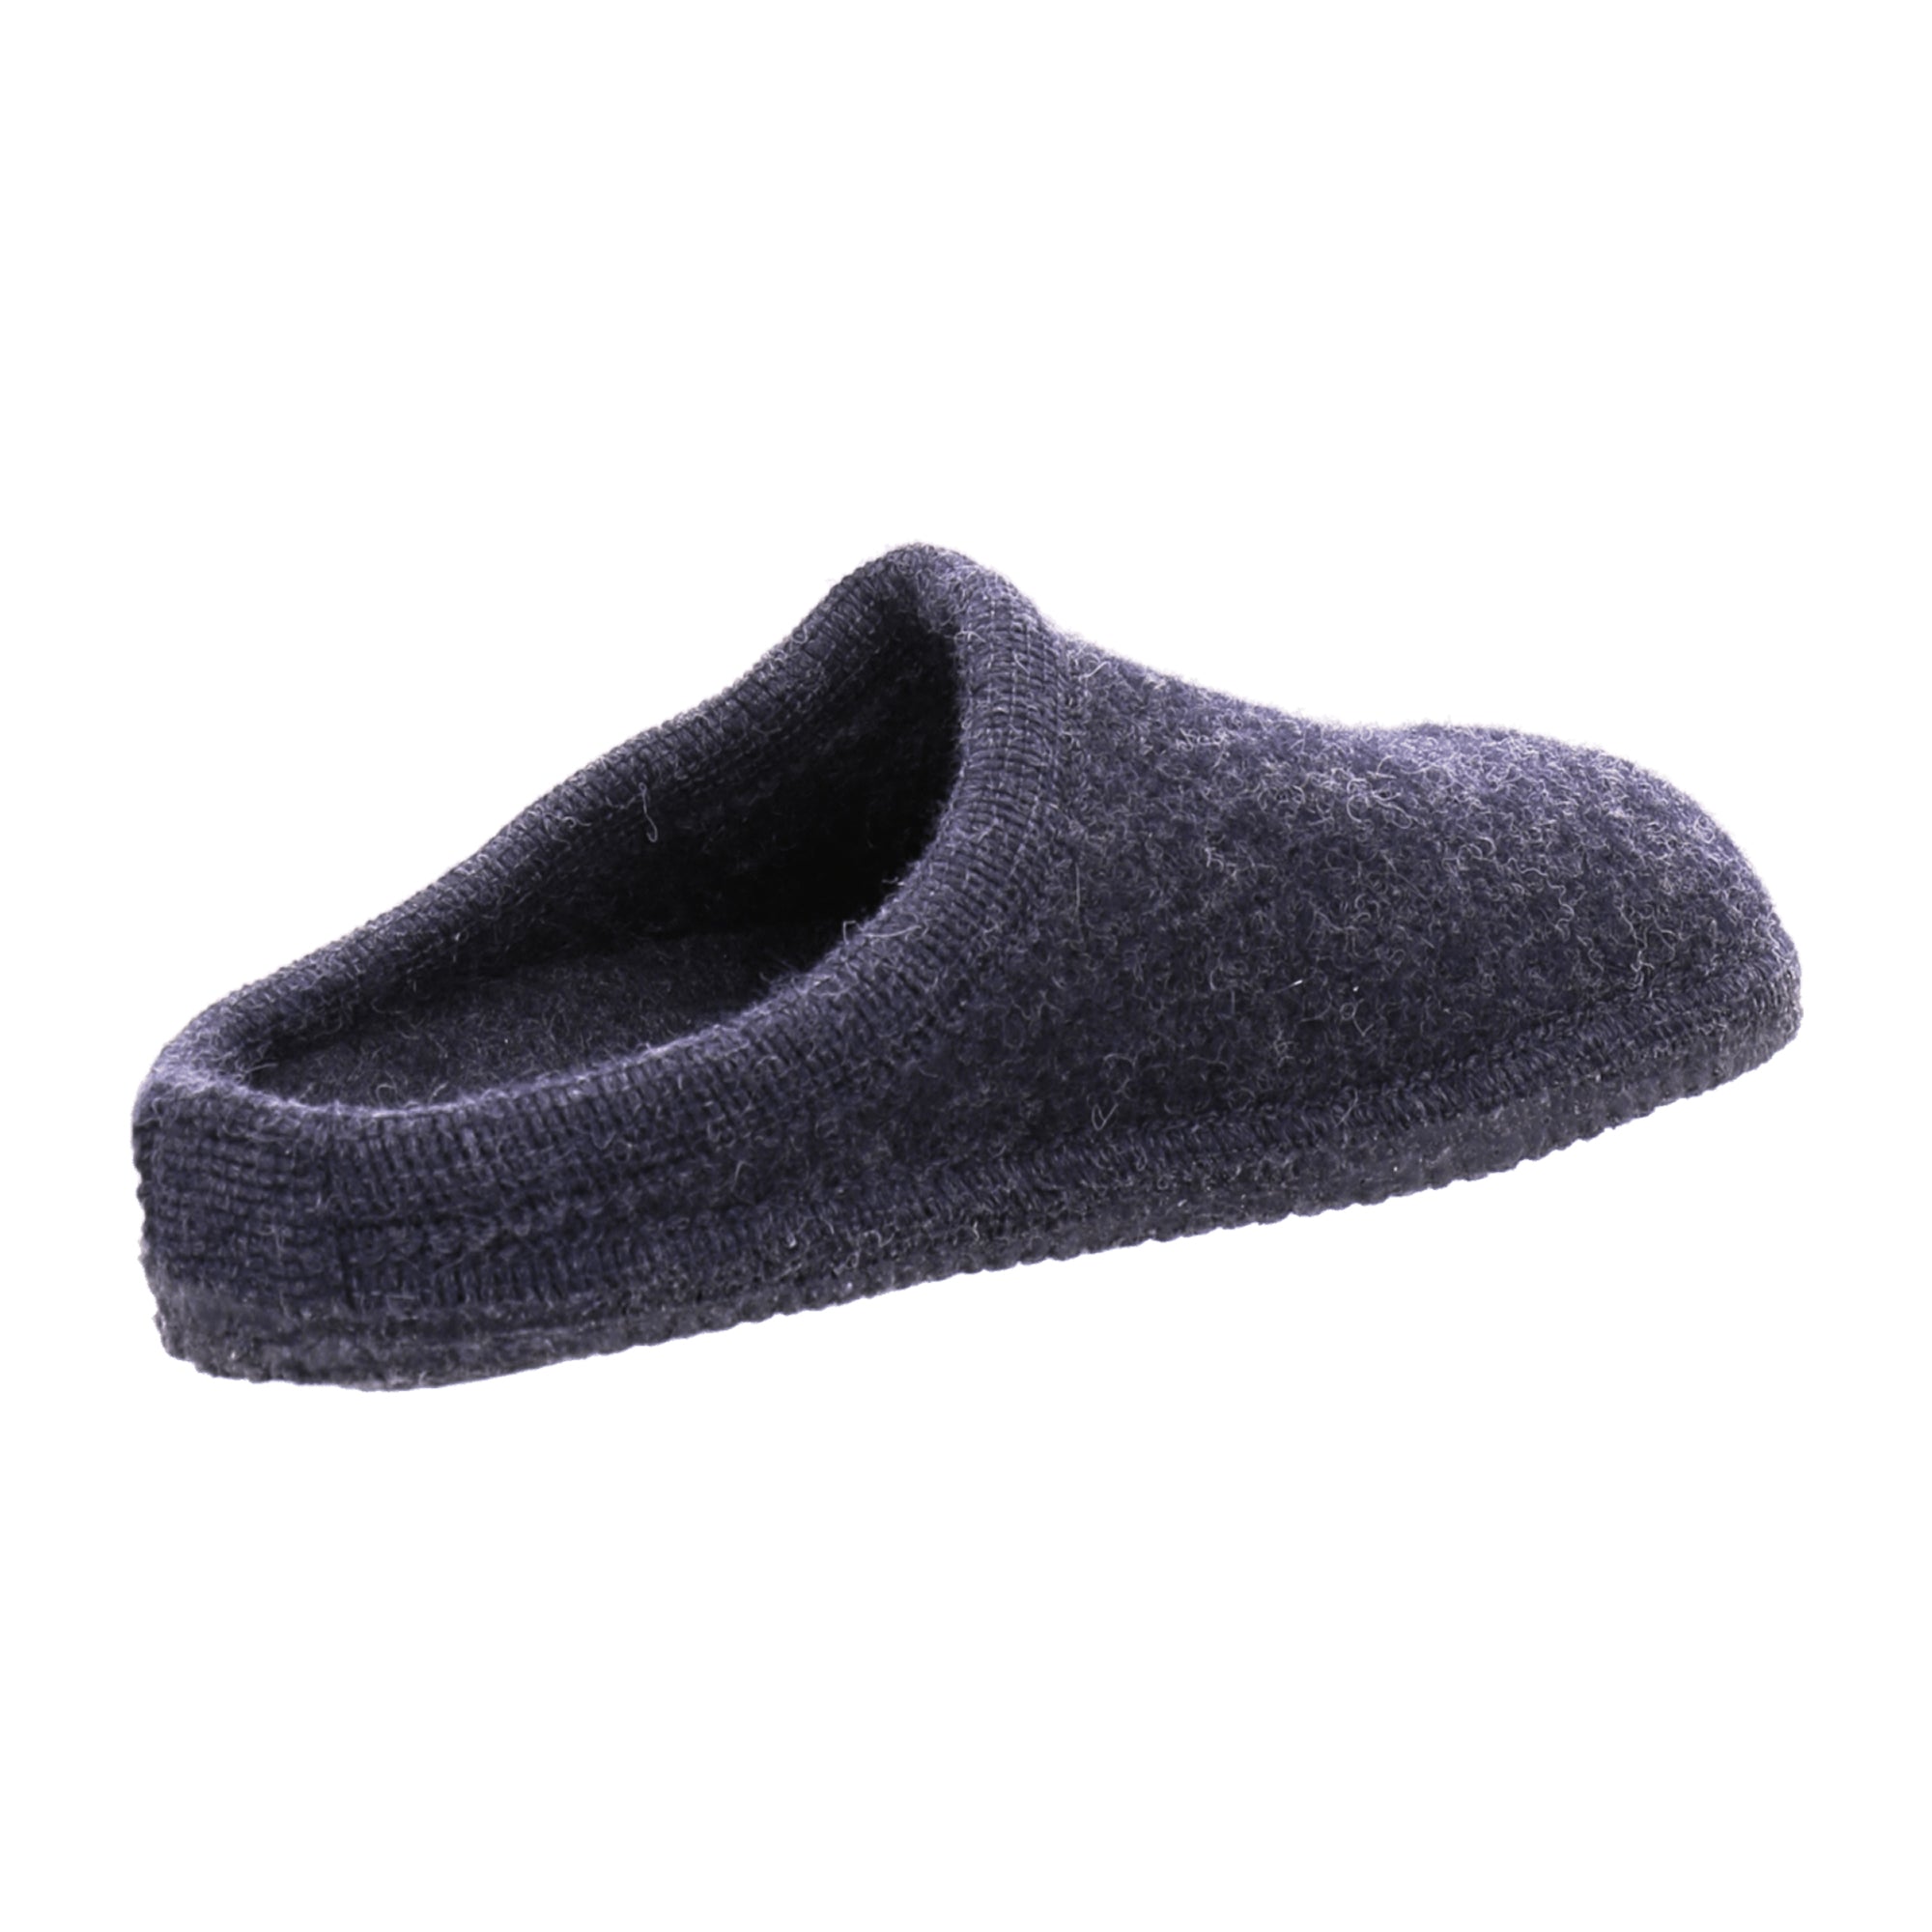 Haflinger Alaska Men's Slippers, Comfortable & Stylish, Grey